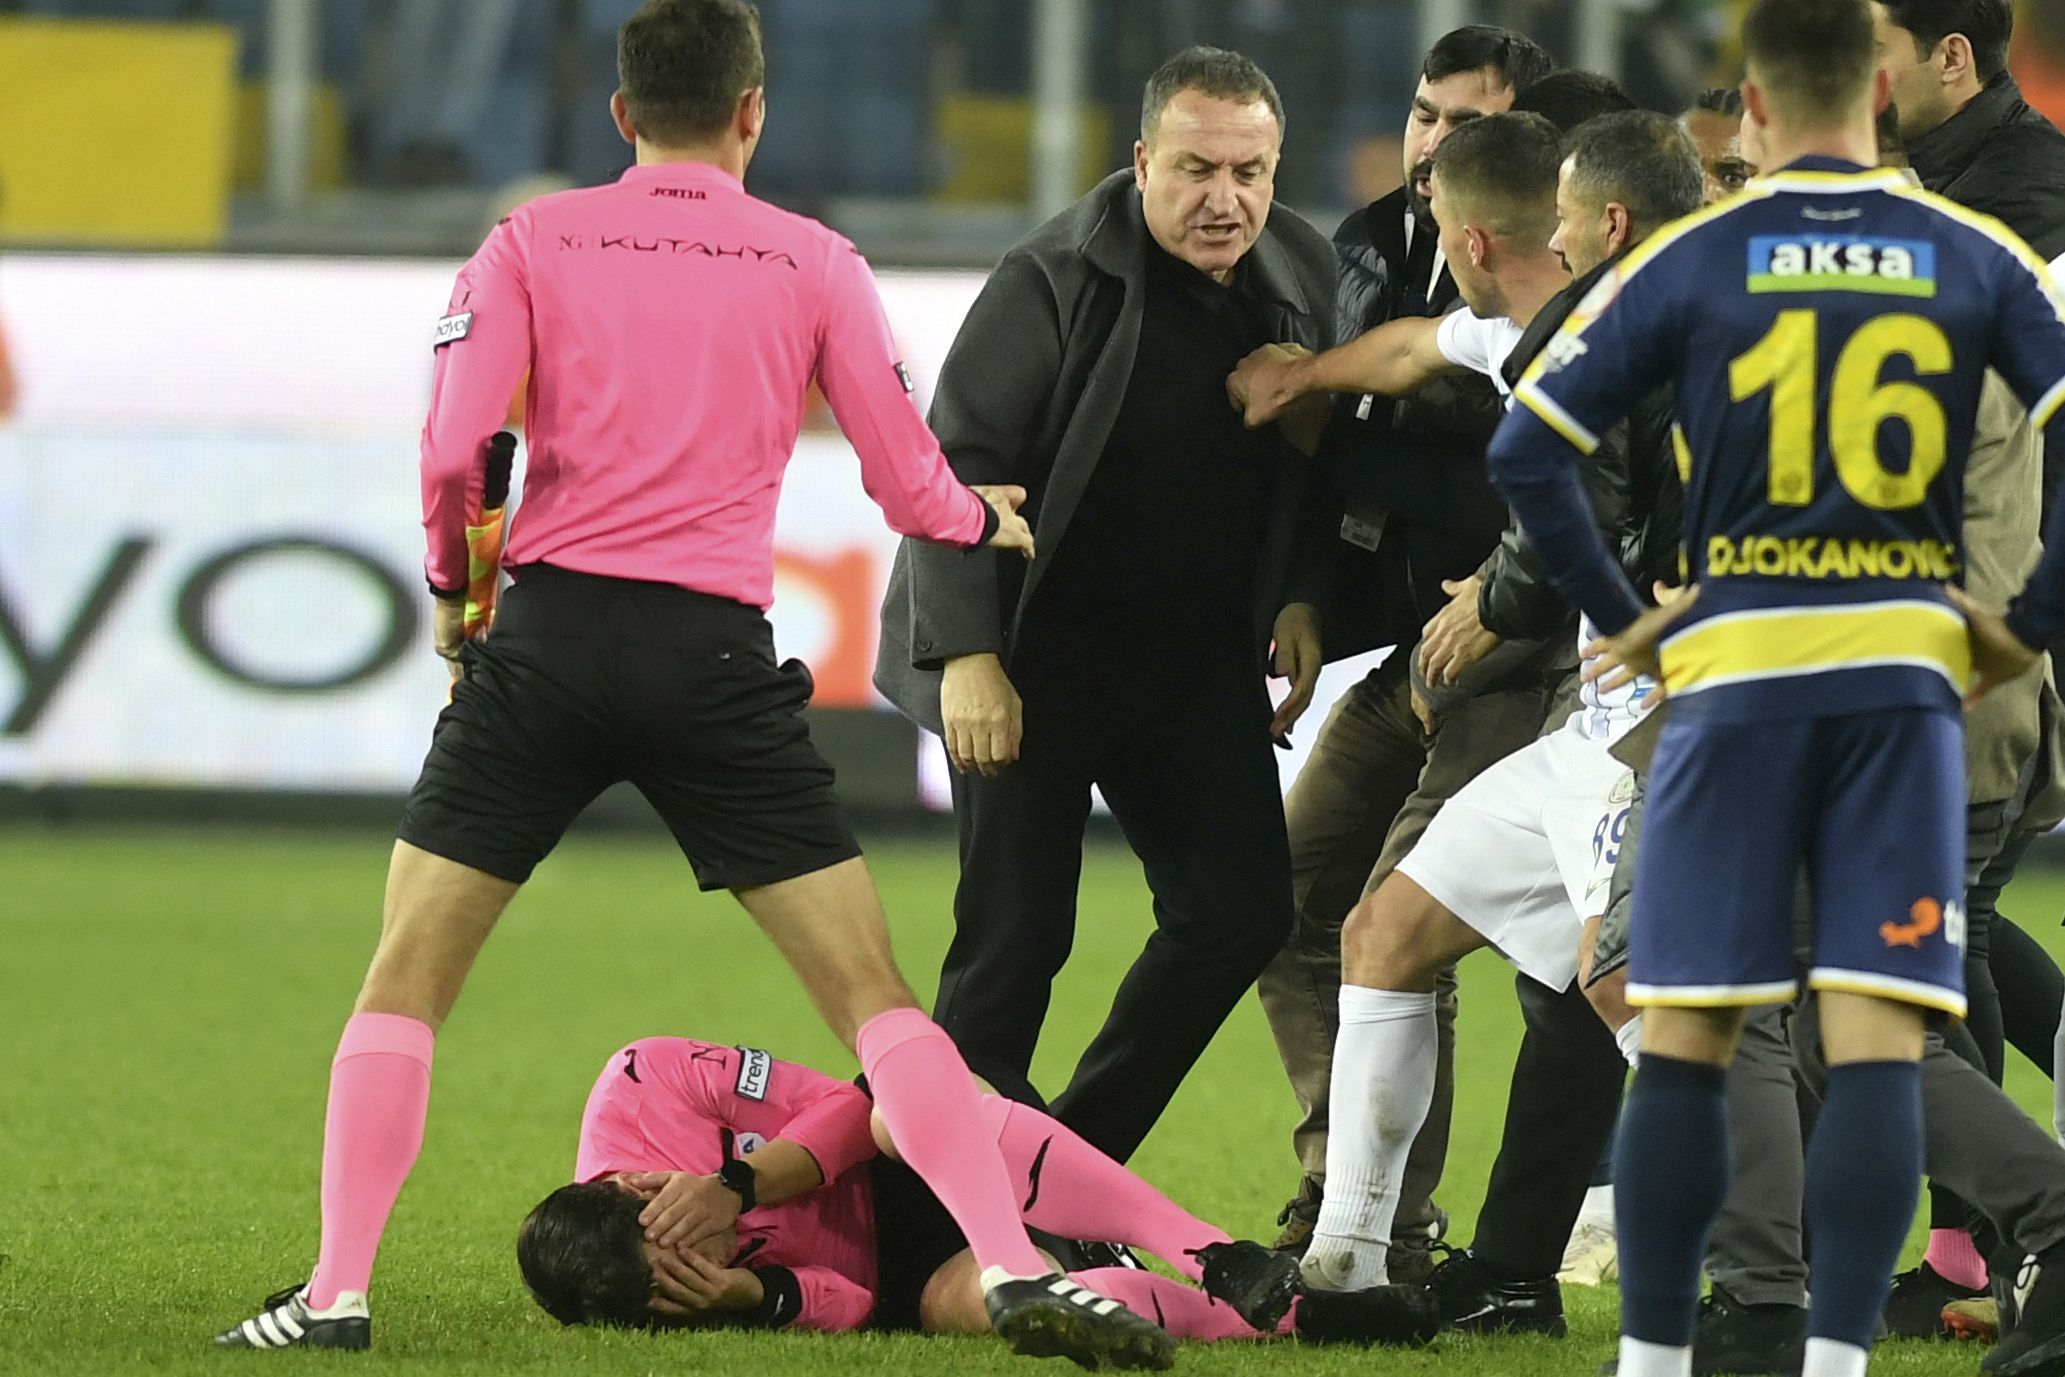 Club president arrested after punching referee in Turkish Super Lig assault